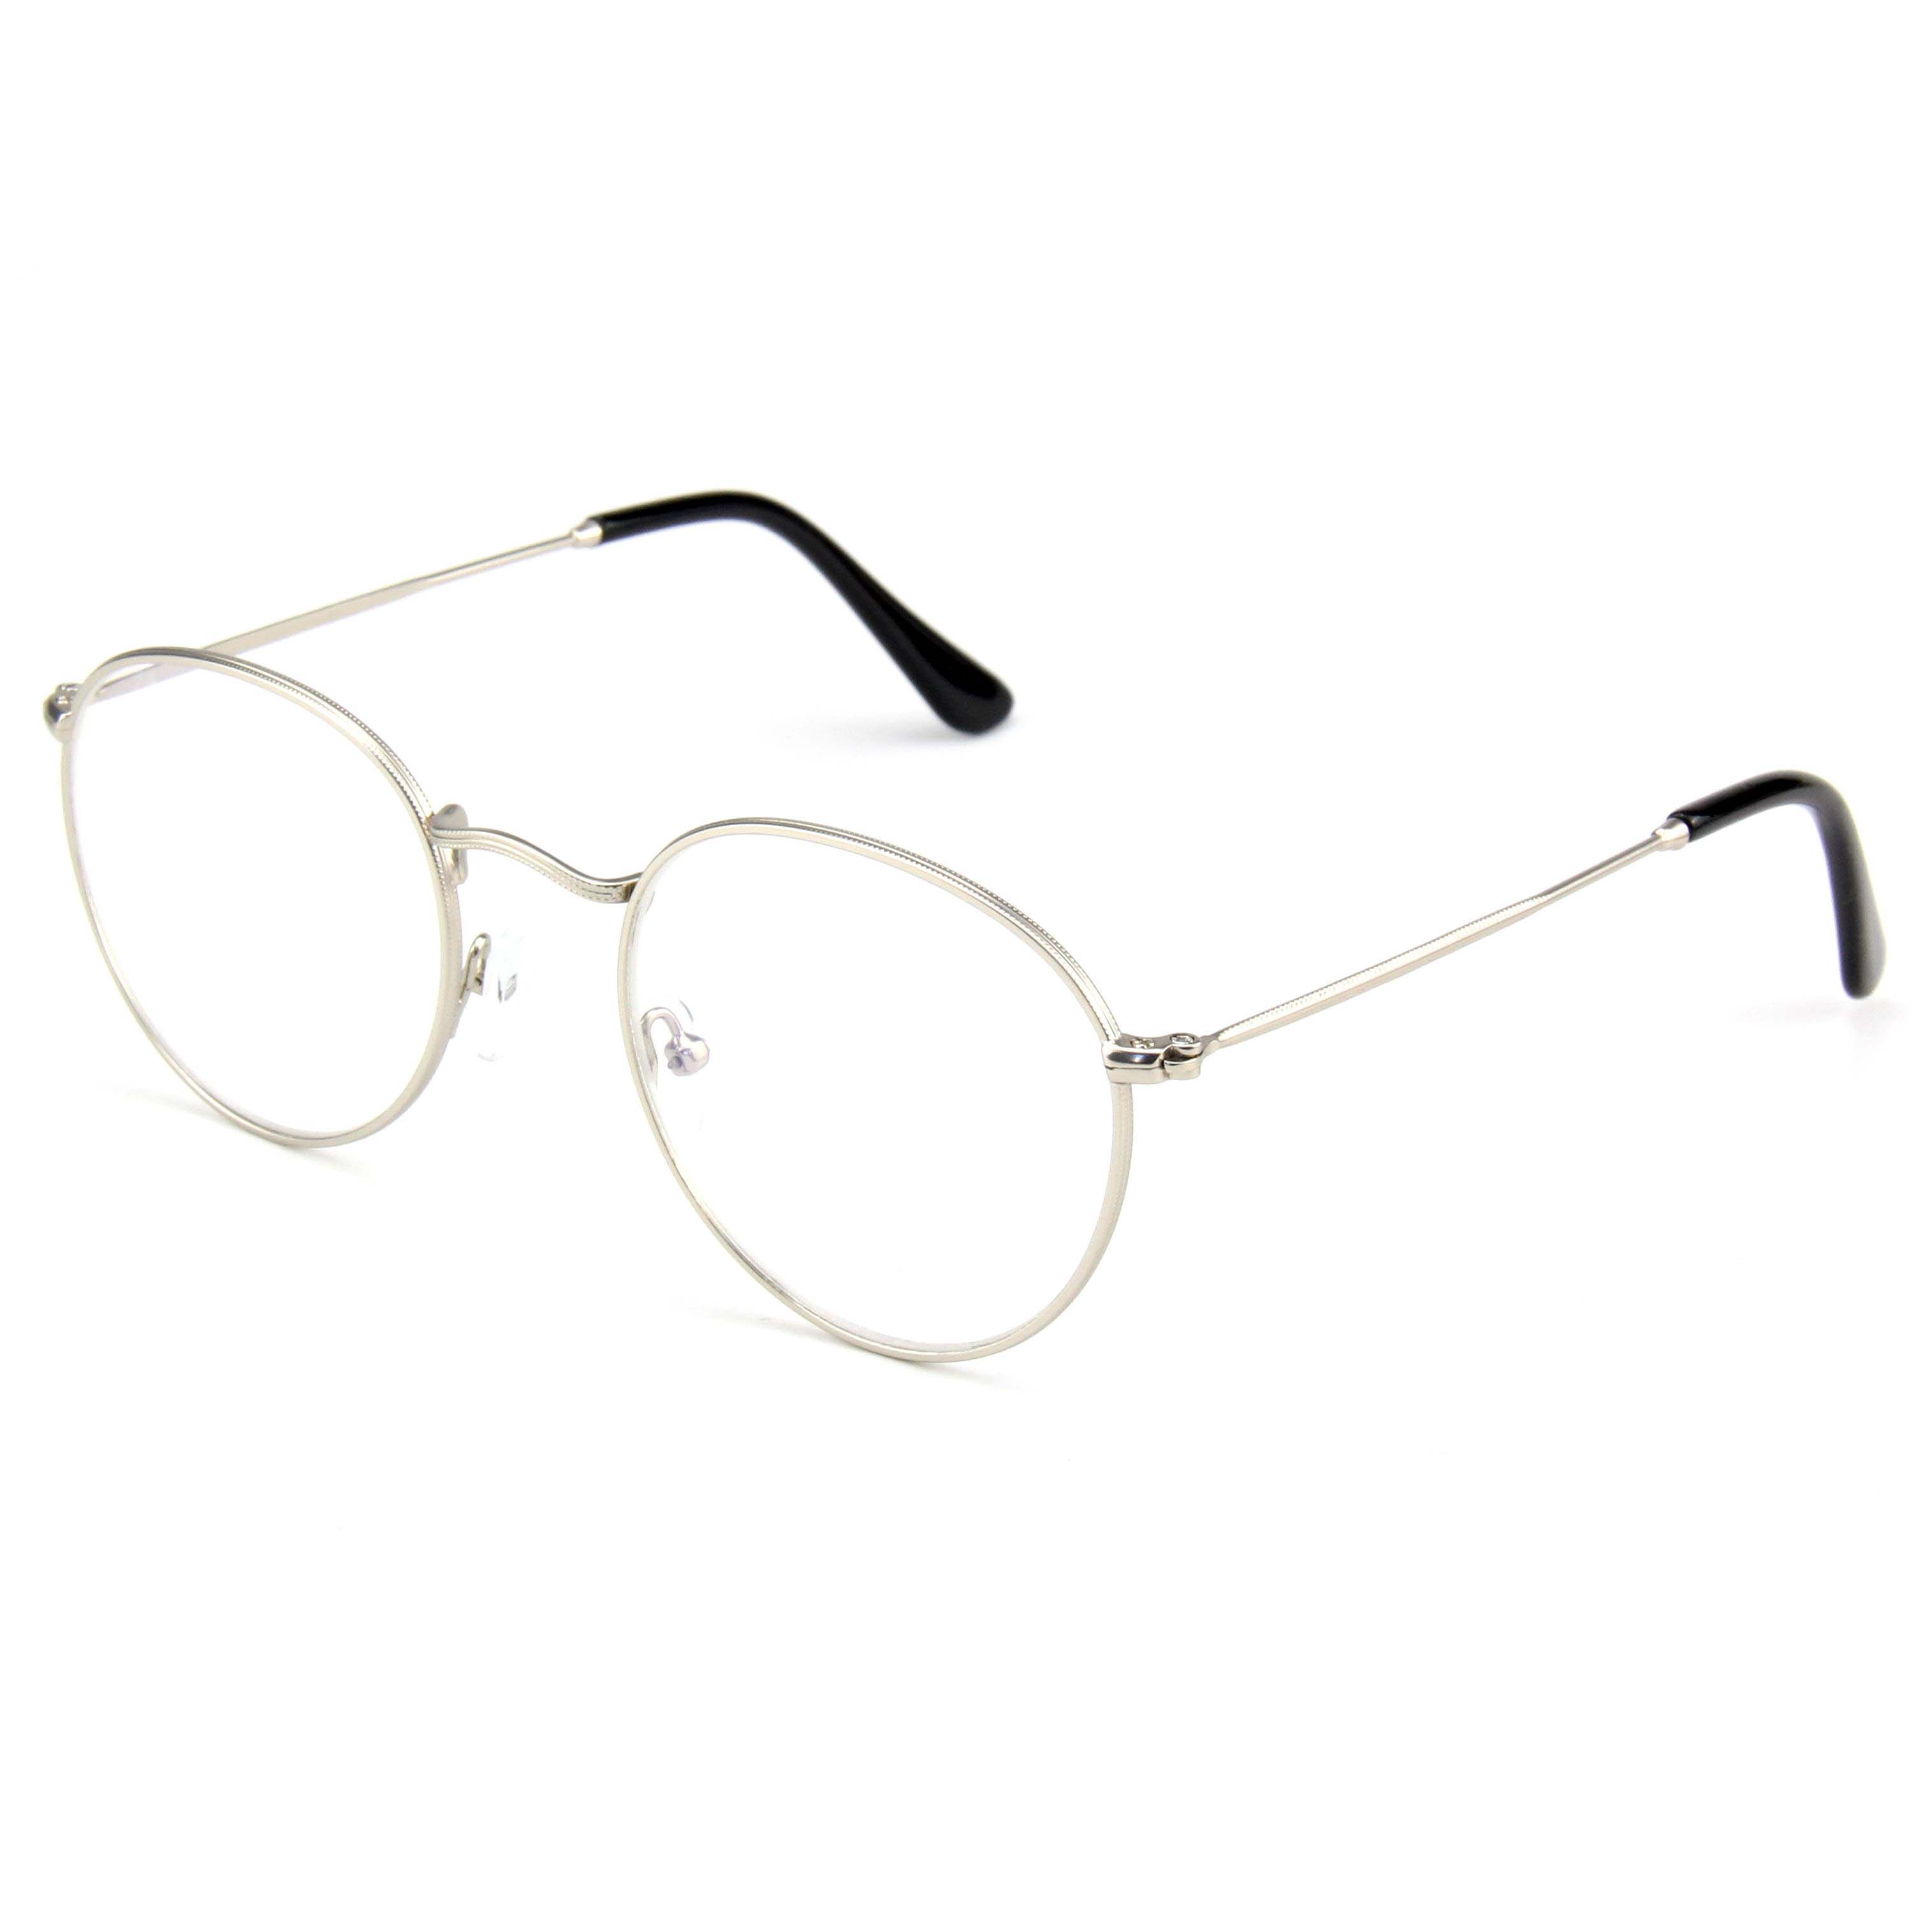 Eugenia optical glasses wholesale modern design -2